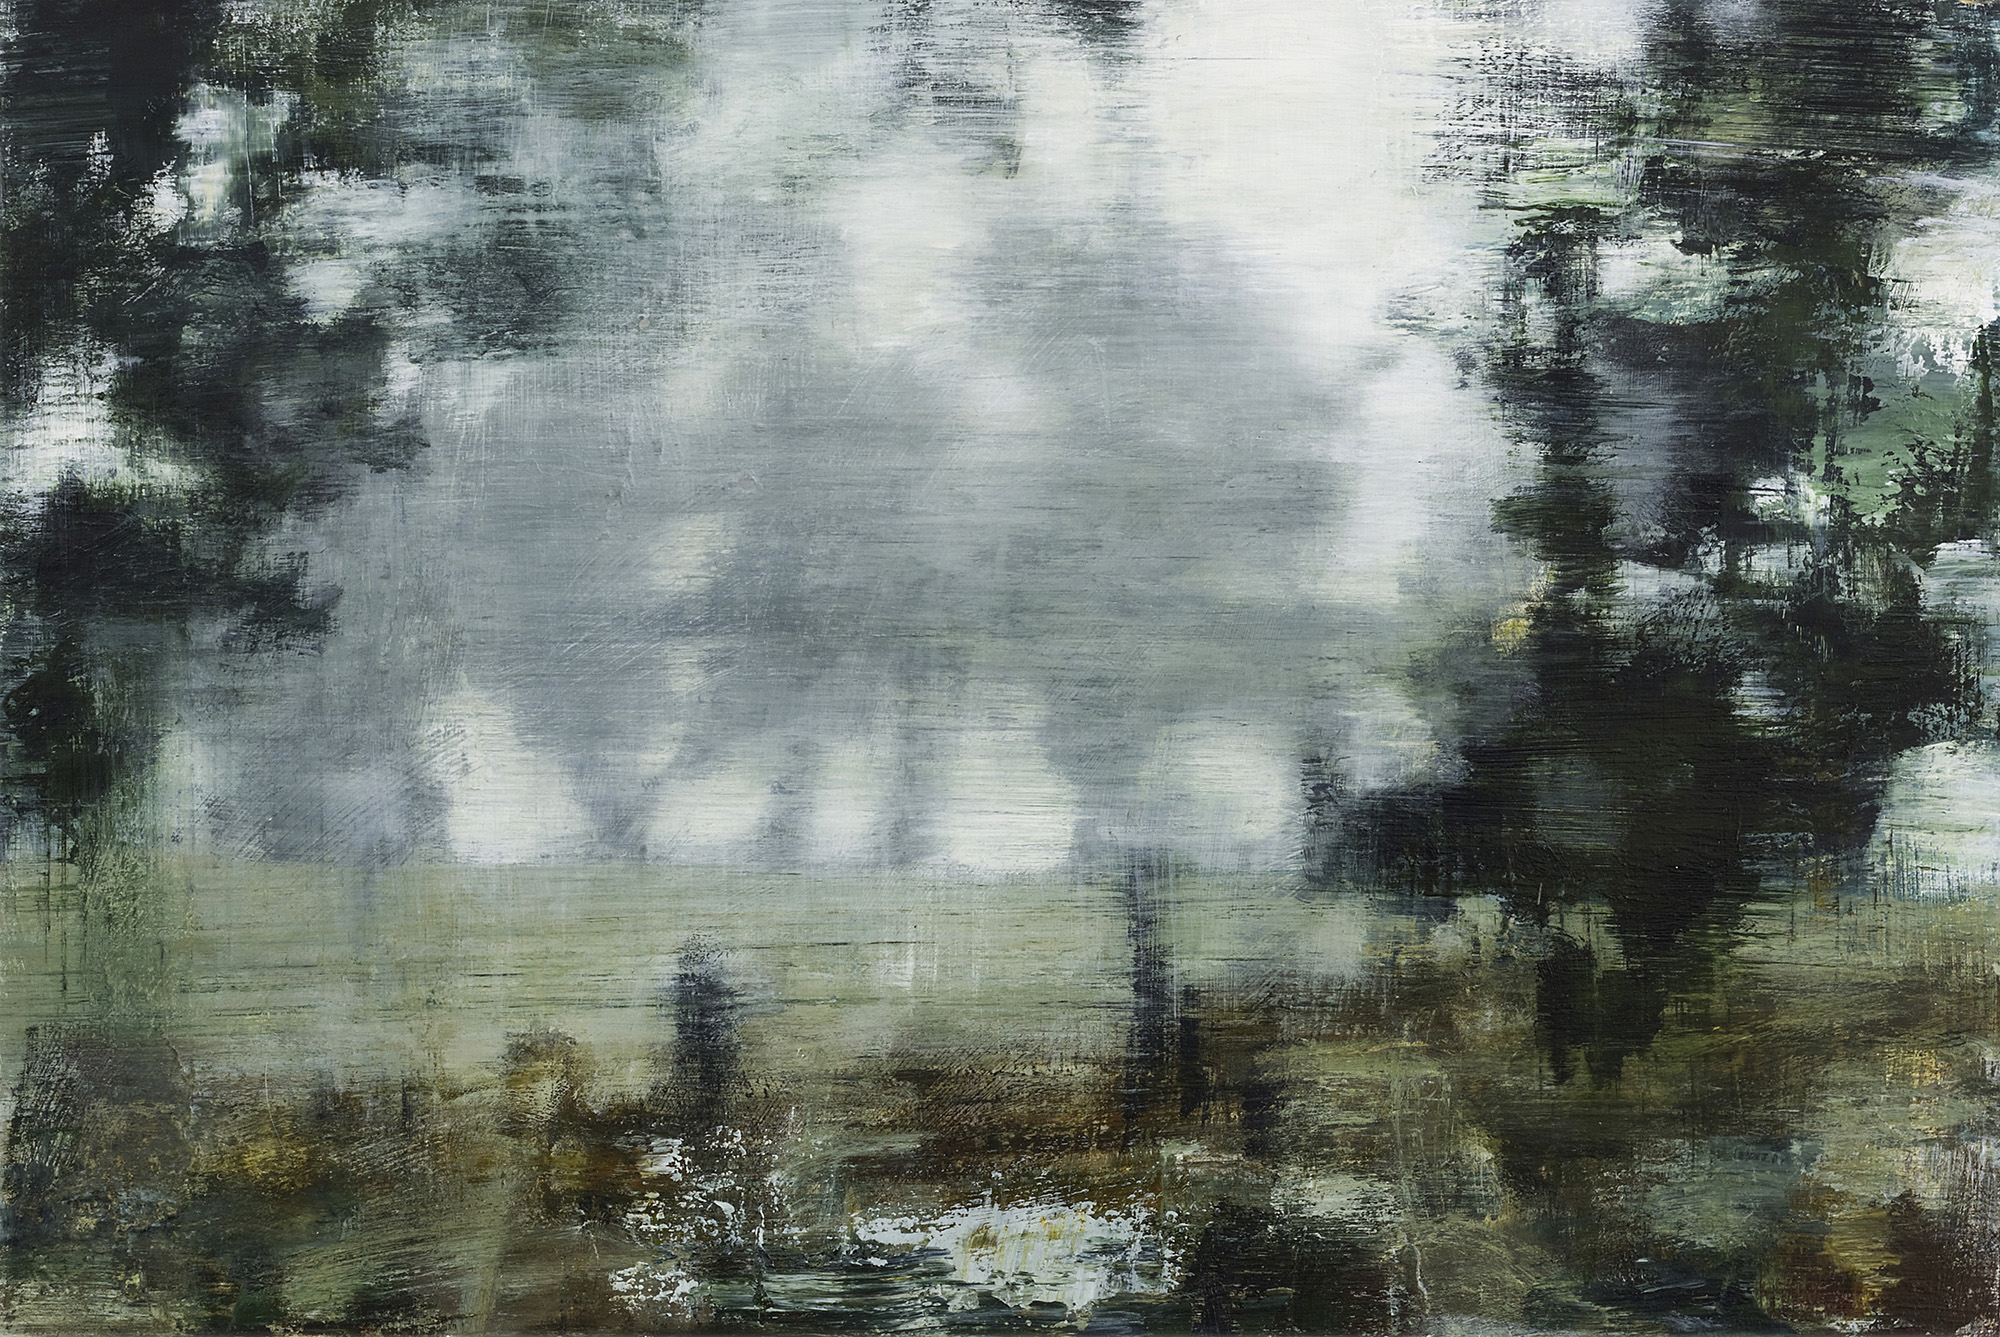  Joanna Logue,&nbsp; Essington - View,  2015, acrylic on board, 40 x 60 